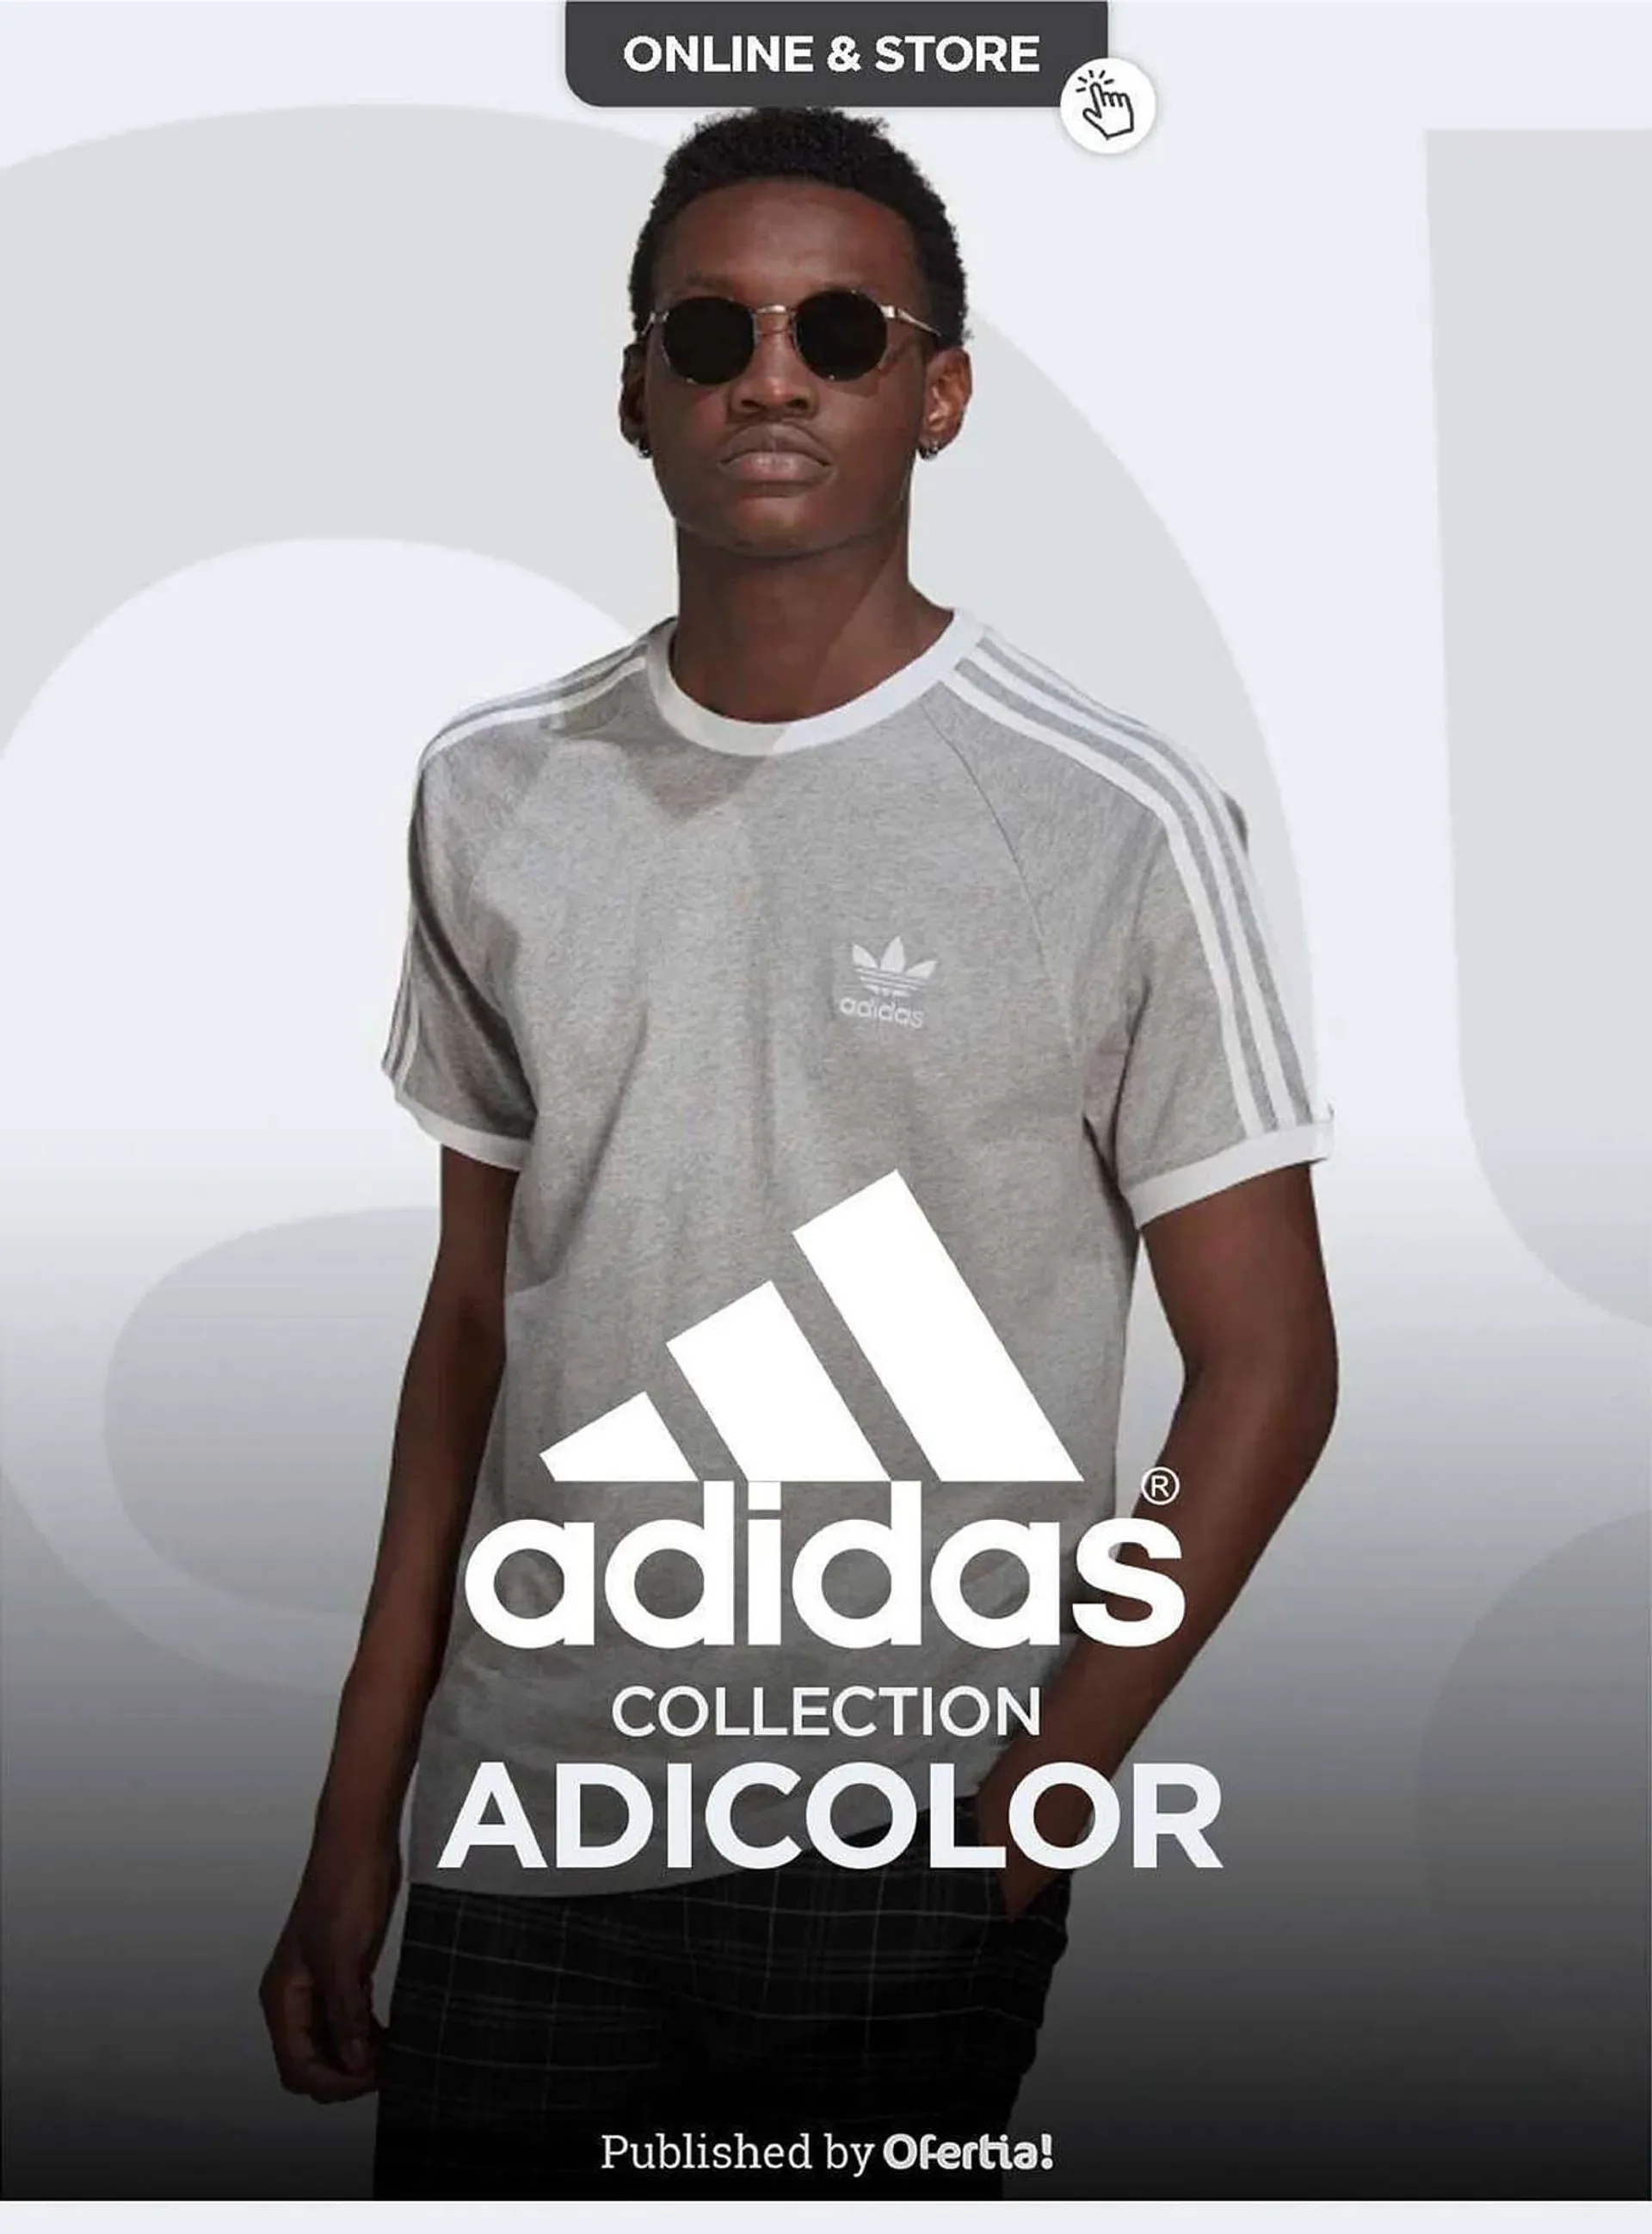 Adidas reklamblad - 1